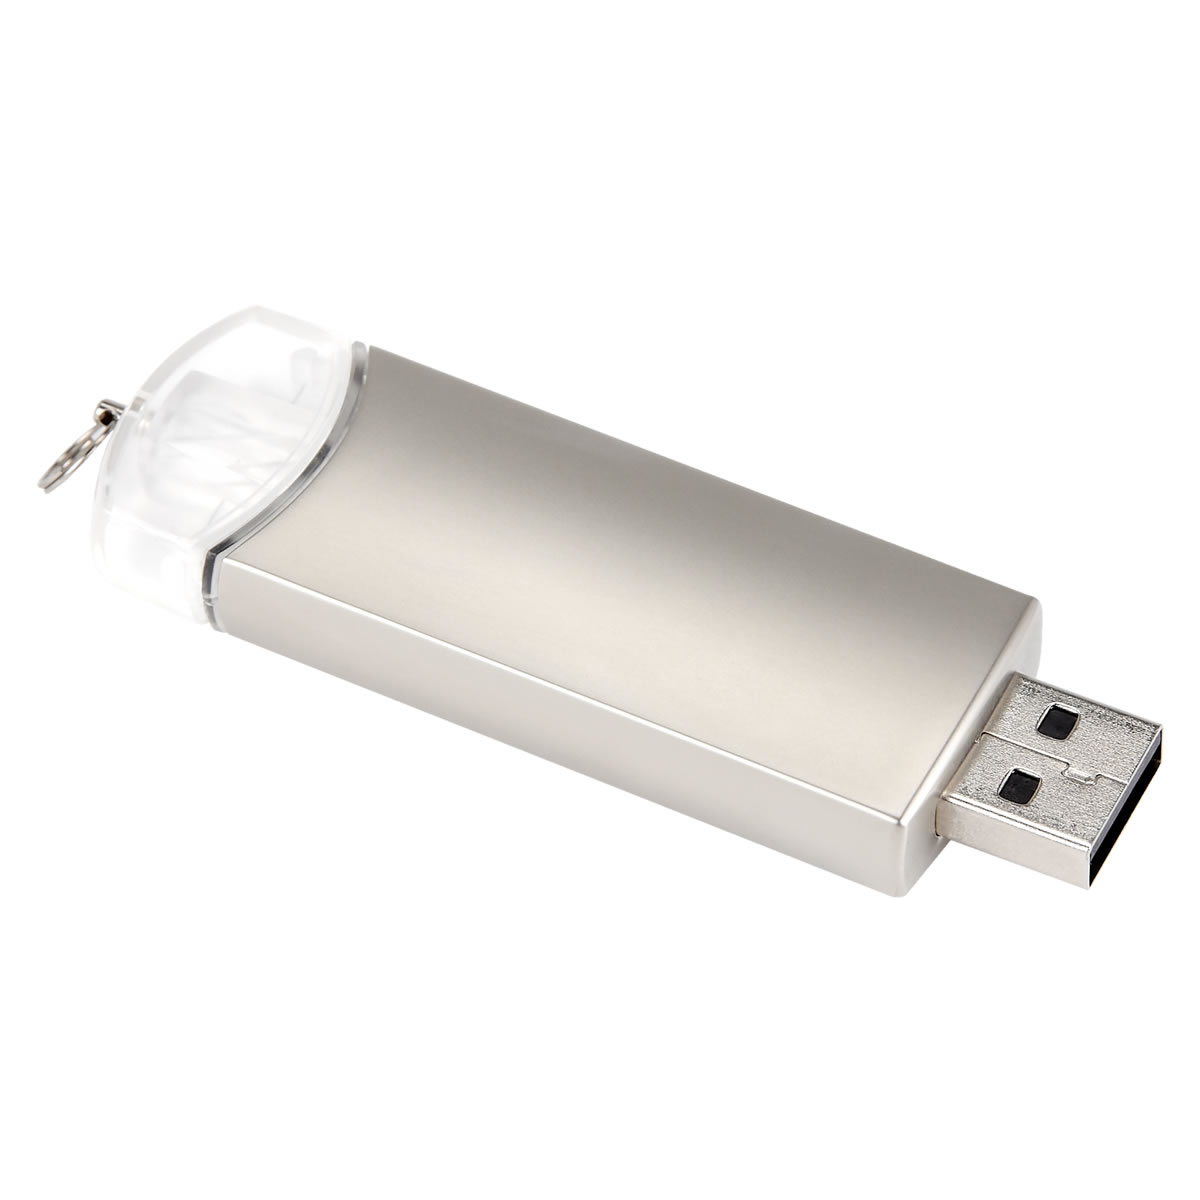 CC1704 - USB MONTBUI 16 GB